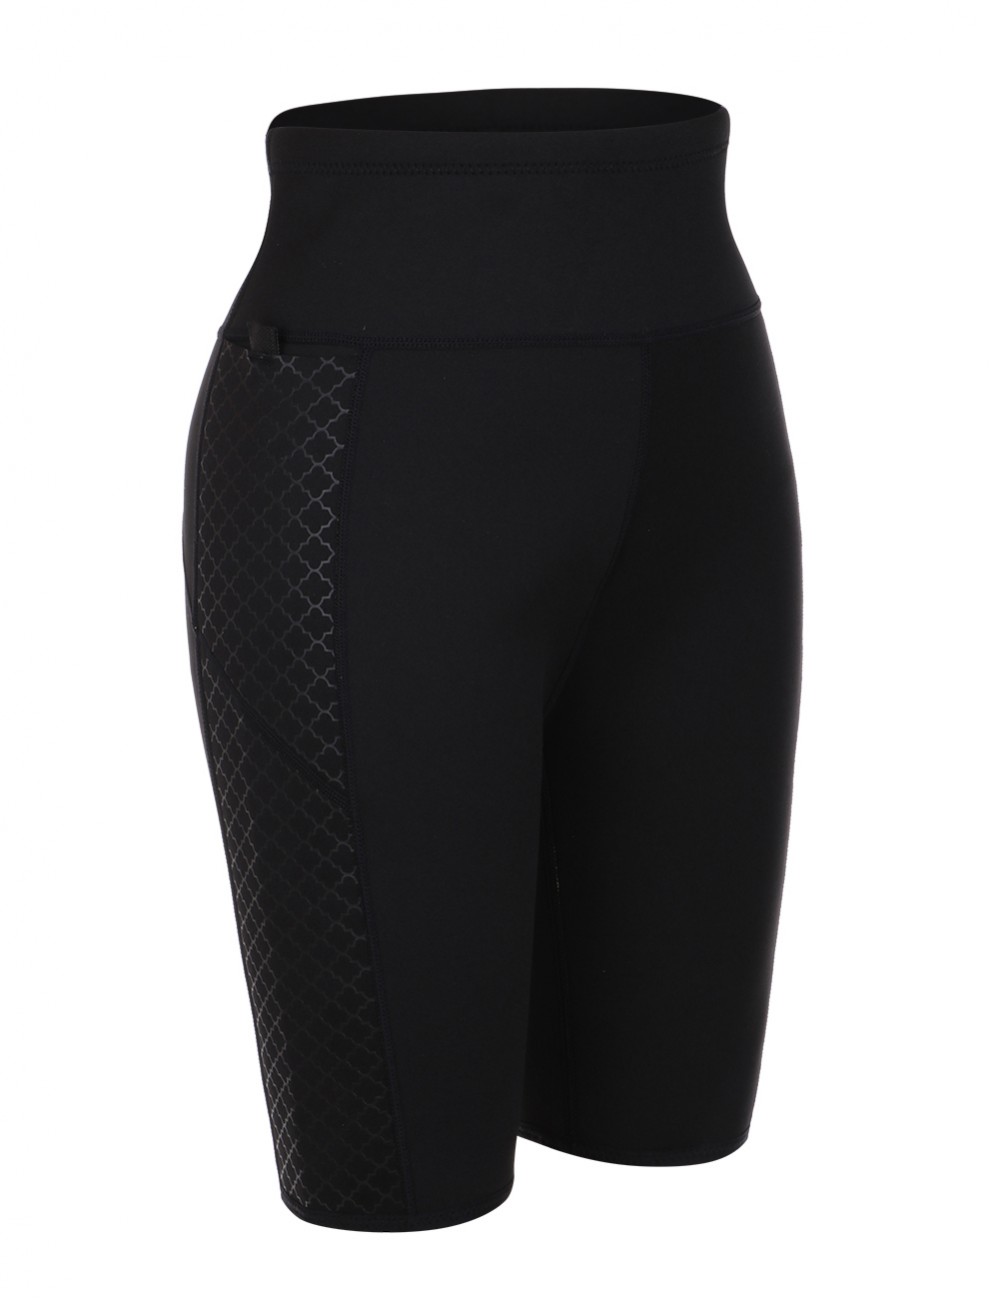 Black Neoprene Print Plus Size Thigh Shaper Side Pockets For Fitness